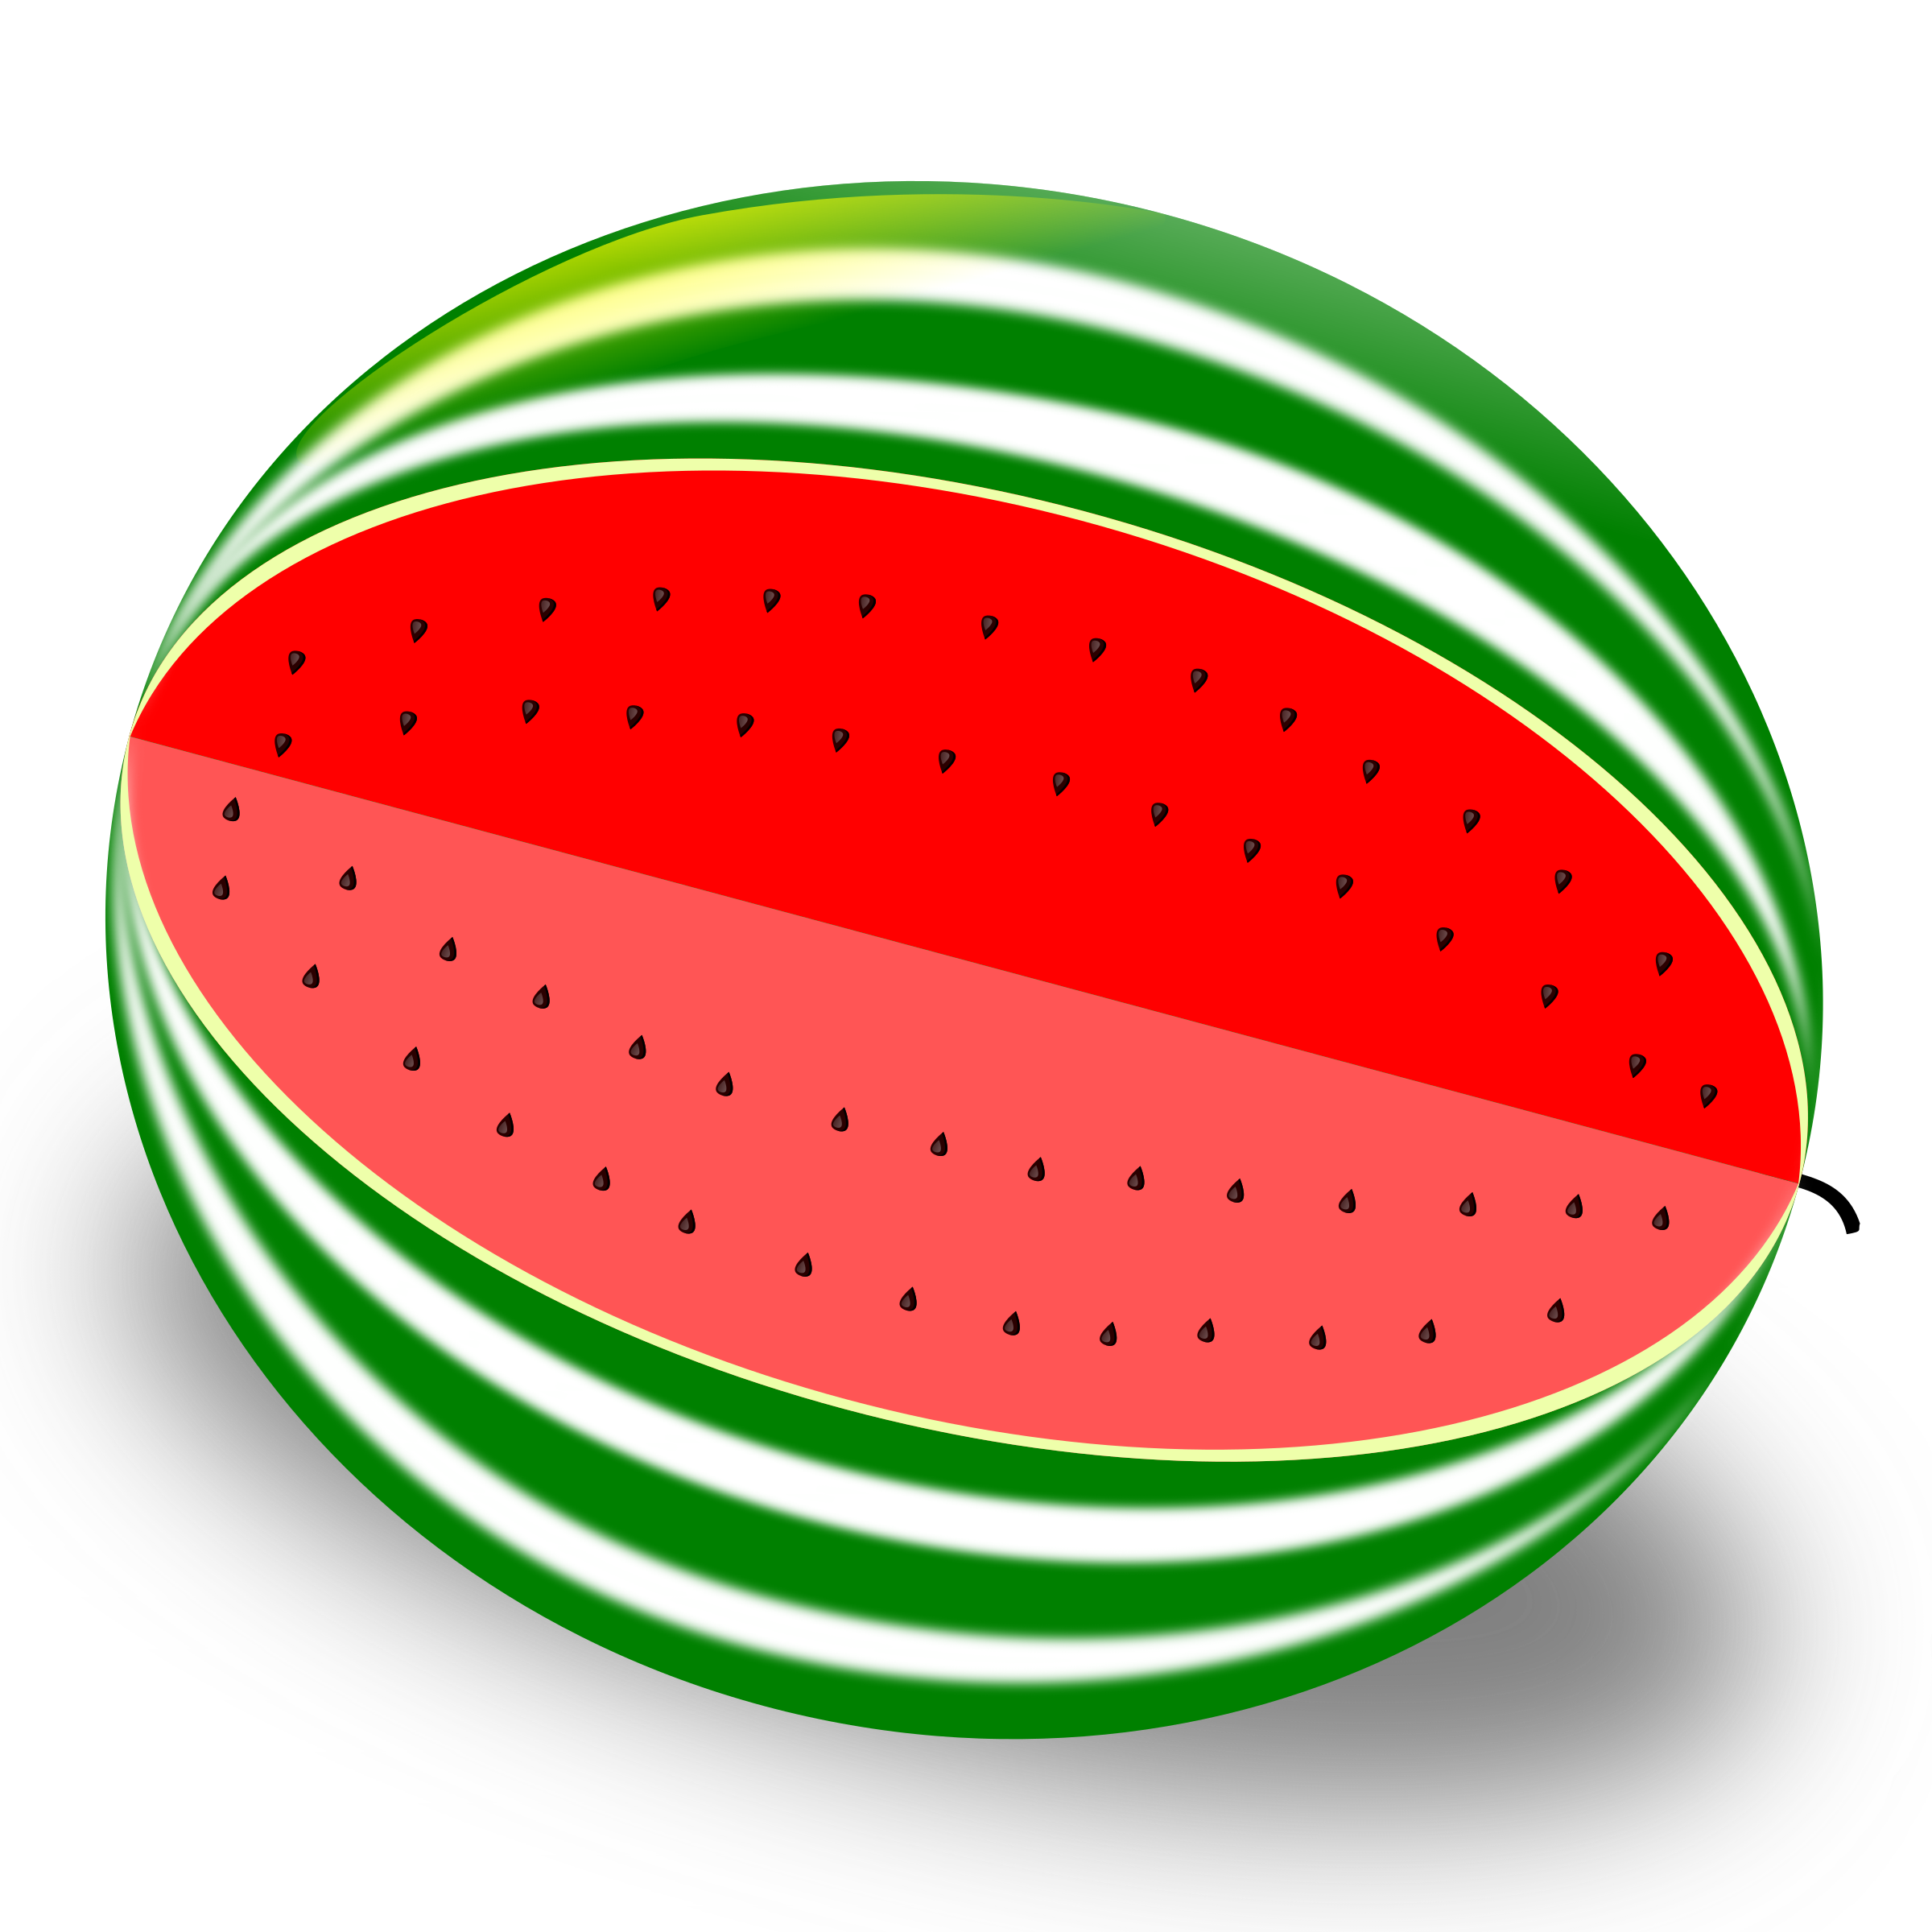 Watermelon Vector clipart image - Free stock photo - Public Domain photo - CC0 Images